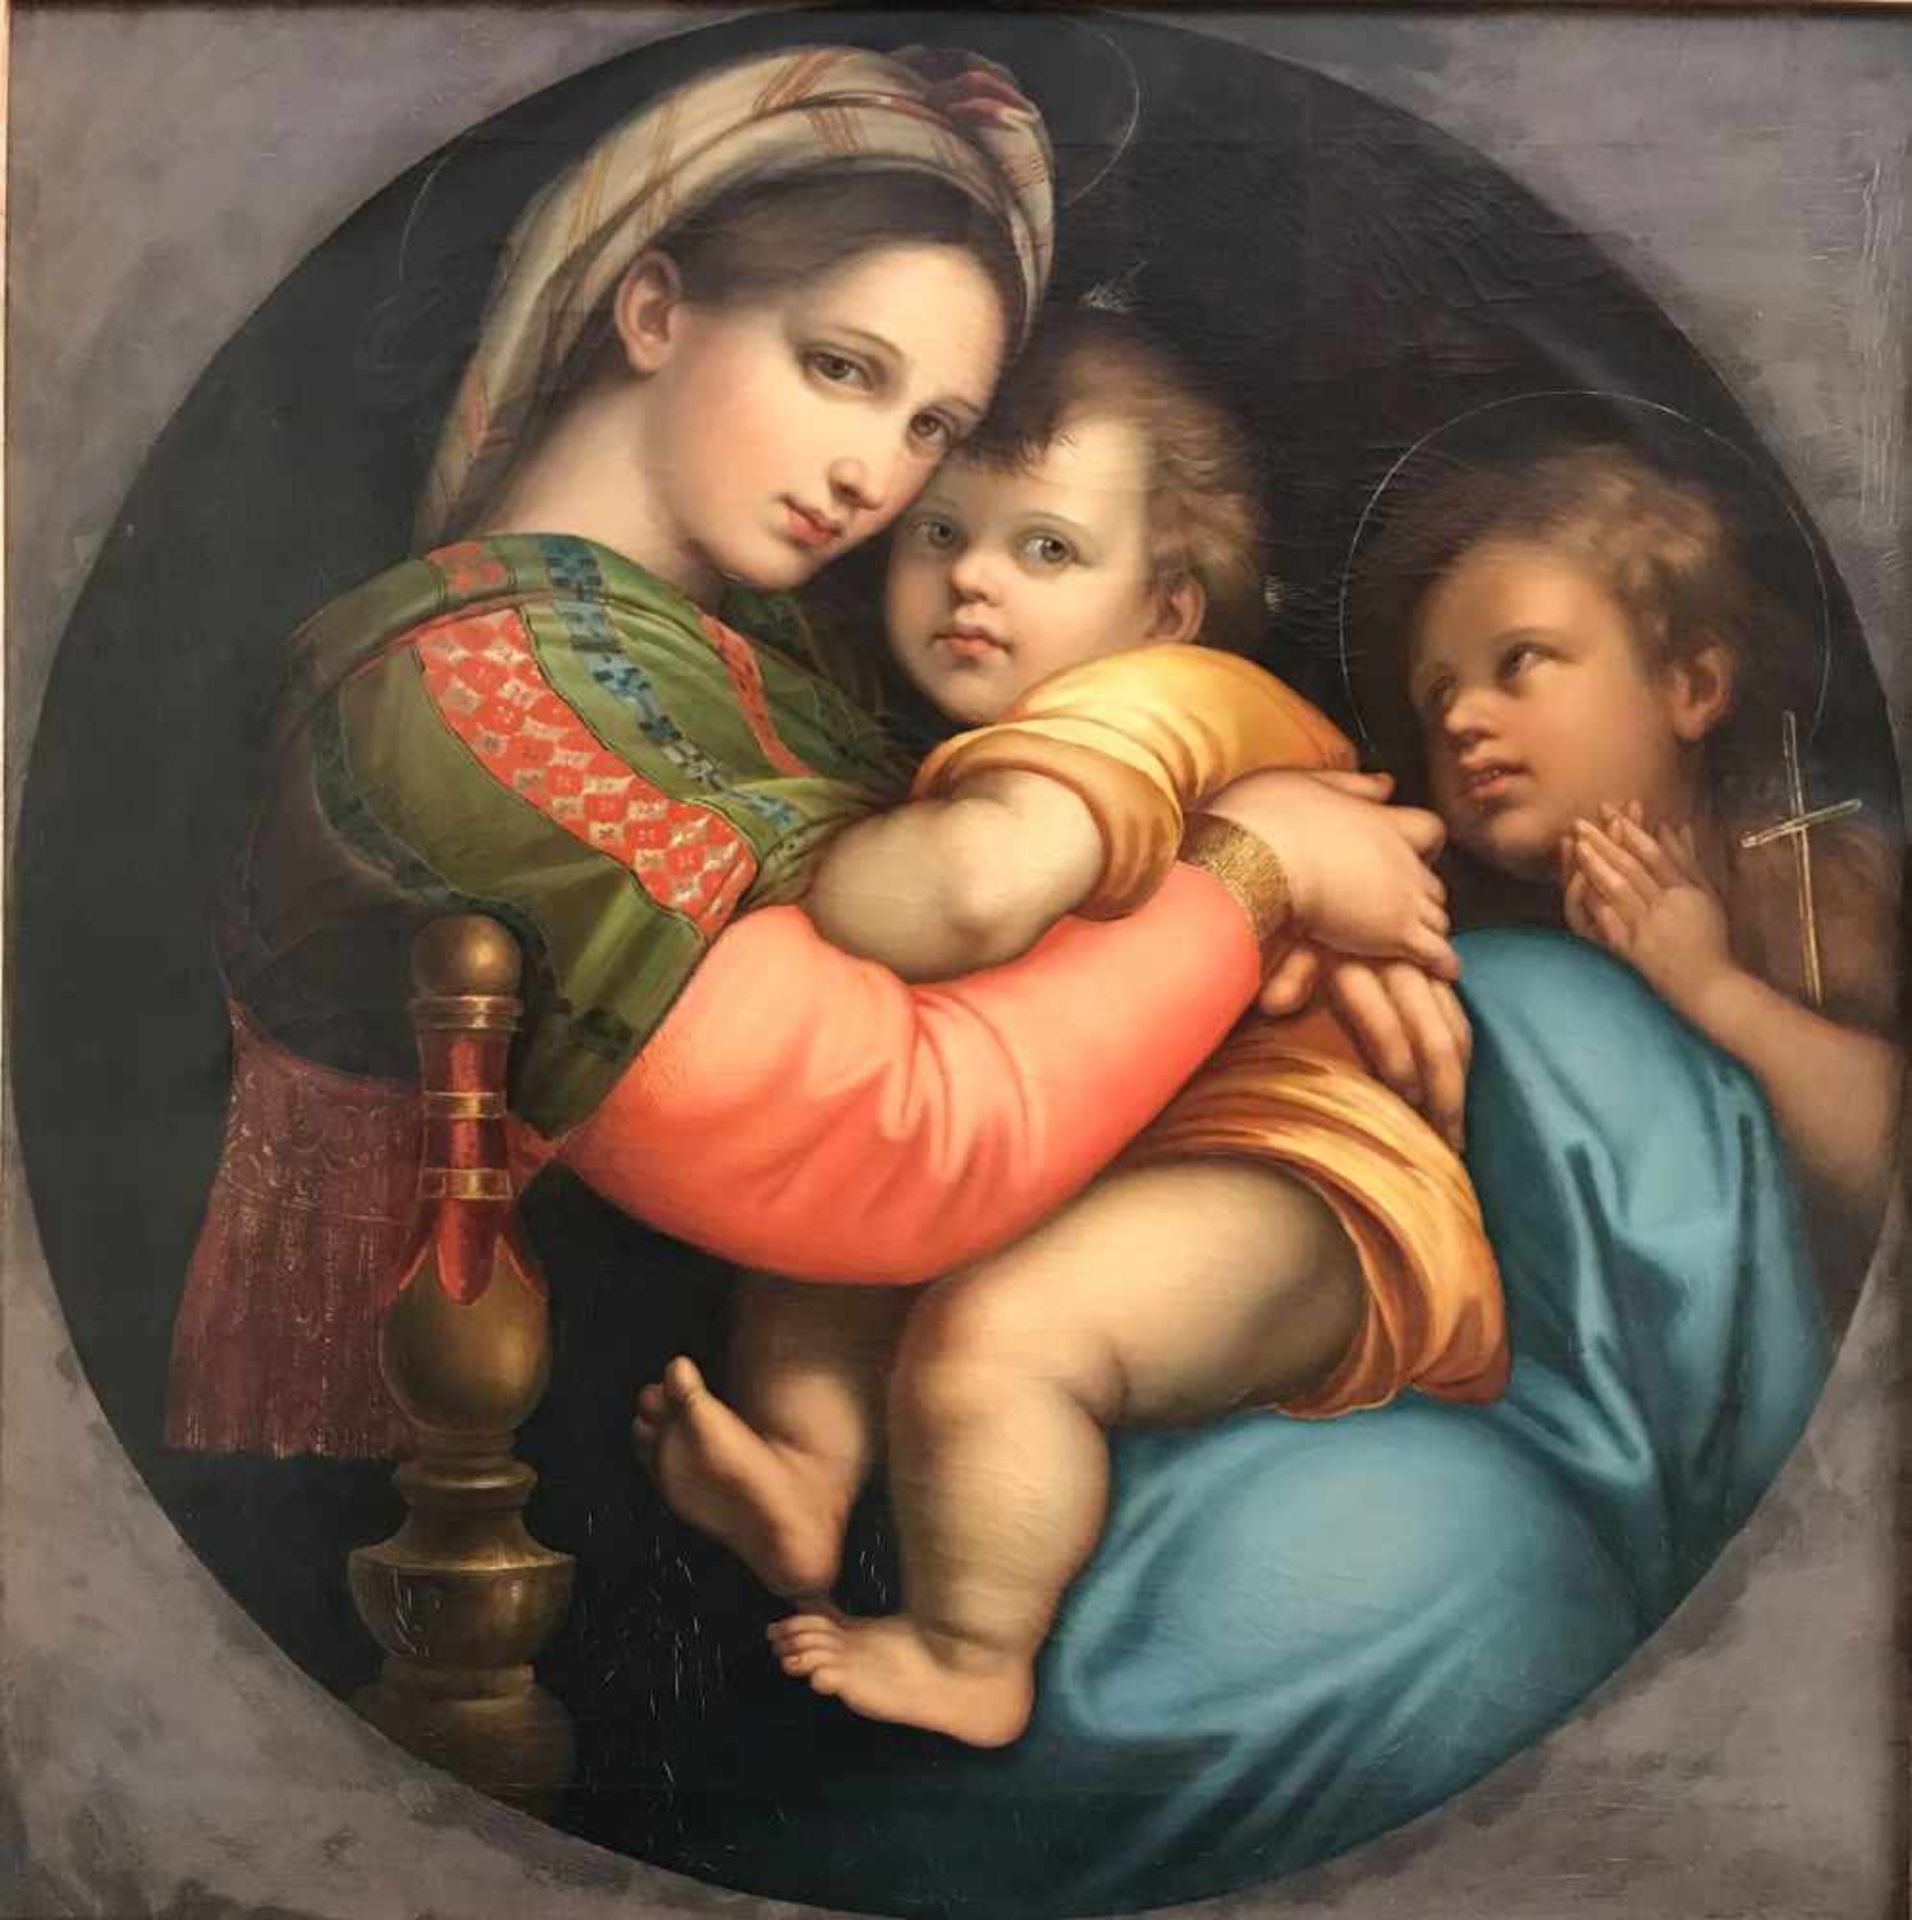 Raffael (Urbino 1583 - 1520 Rom), Madonna della Sedia (Seggiola) Kopie des 19. Jhs. nach dem